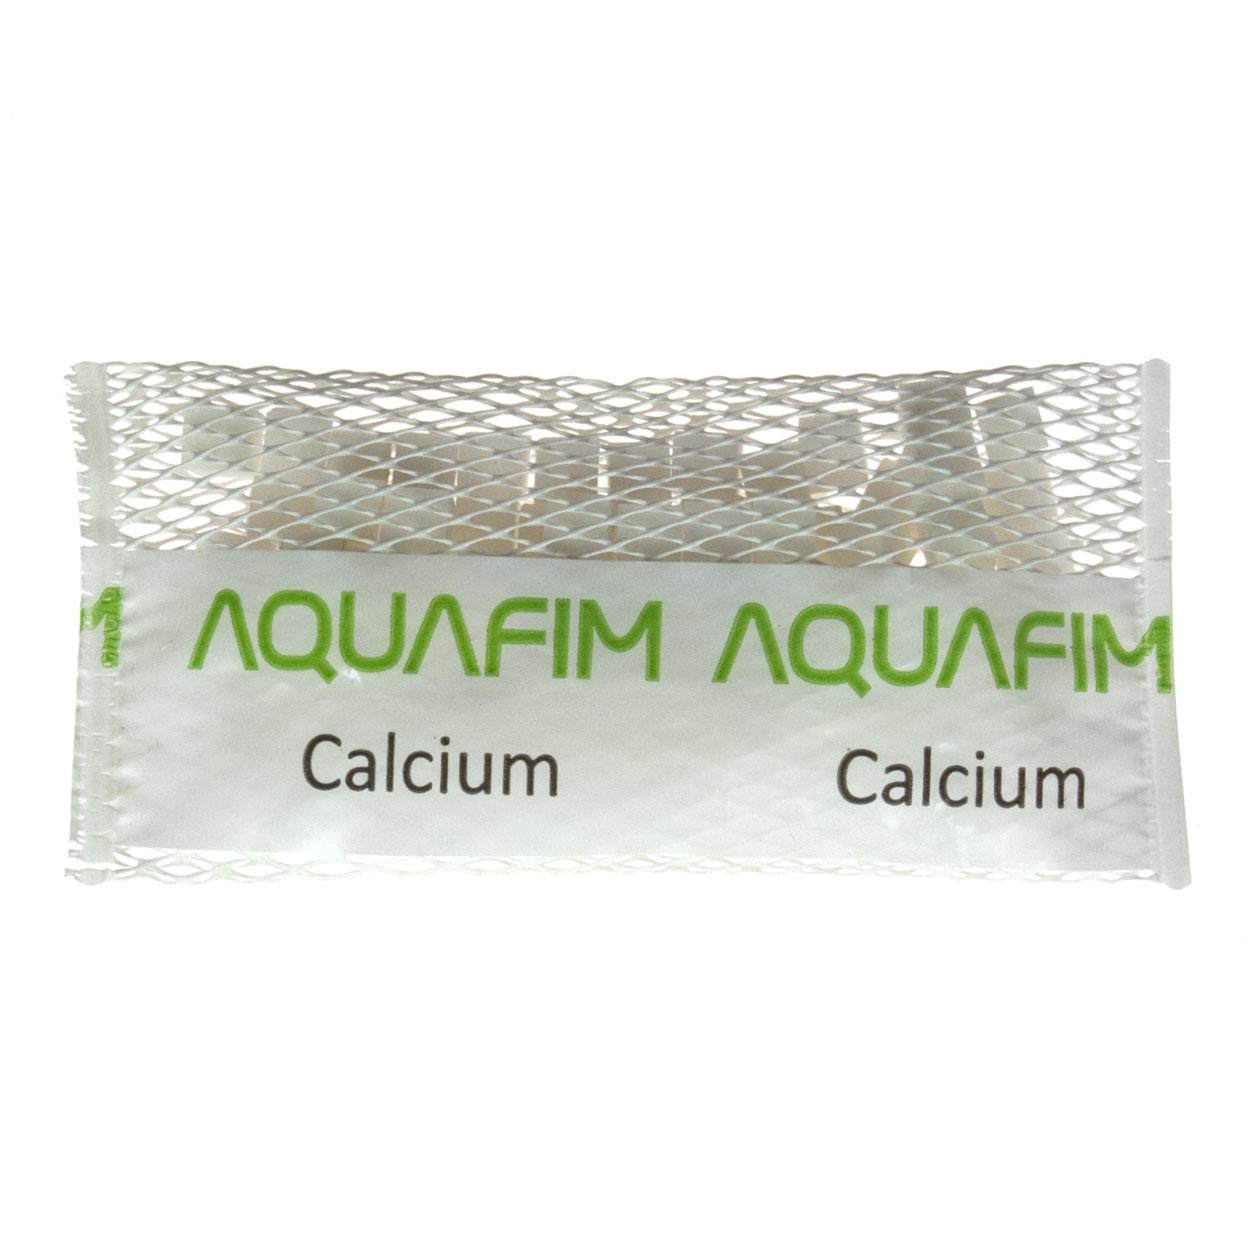 Sealutions Origin - Calcium / Würfel